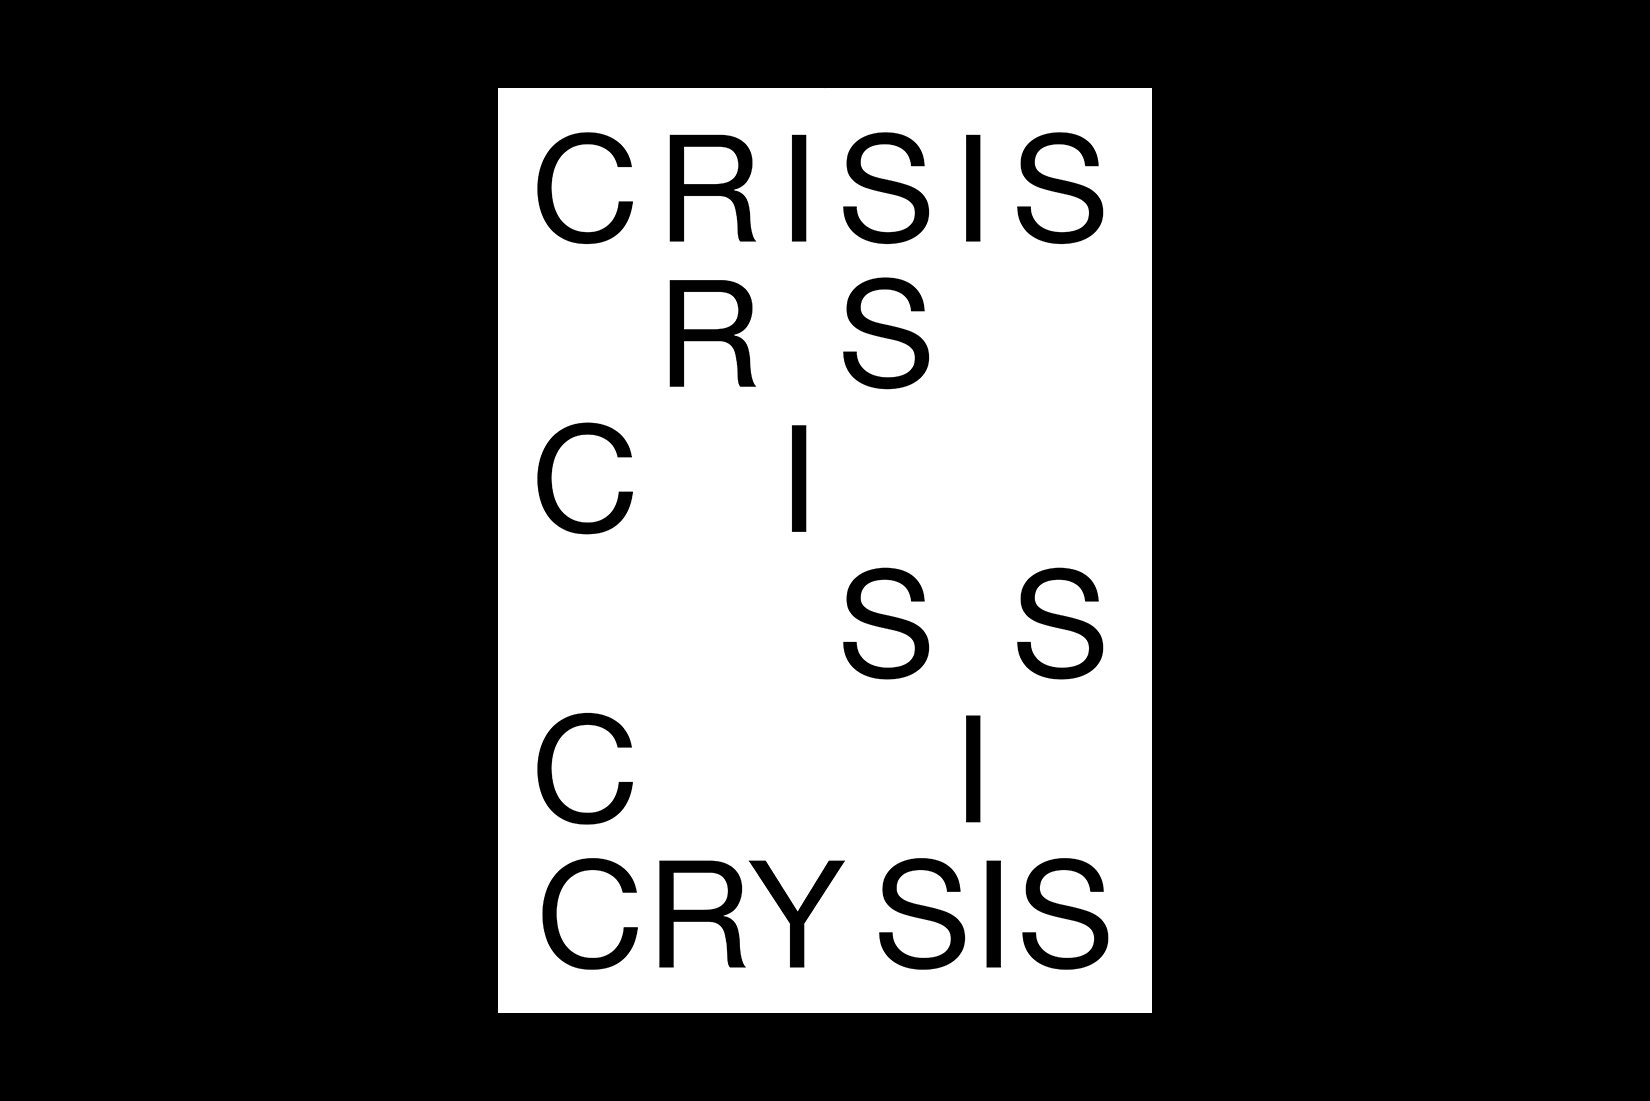 crisis-b5